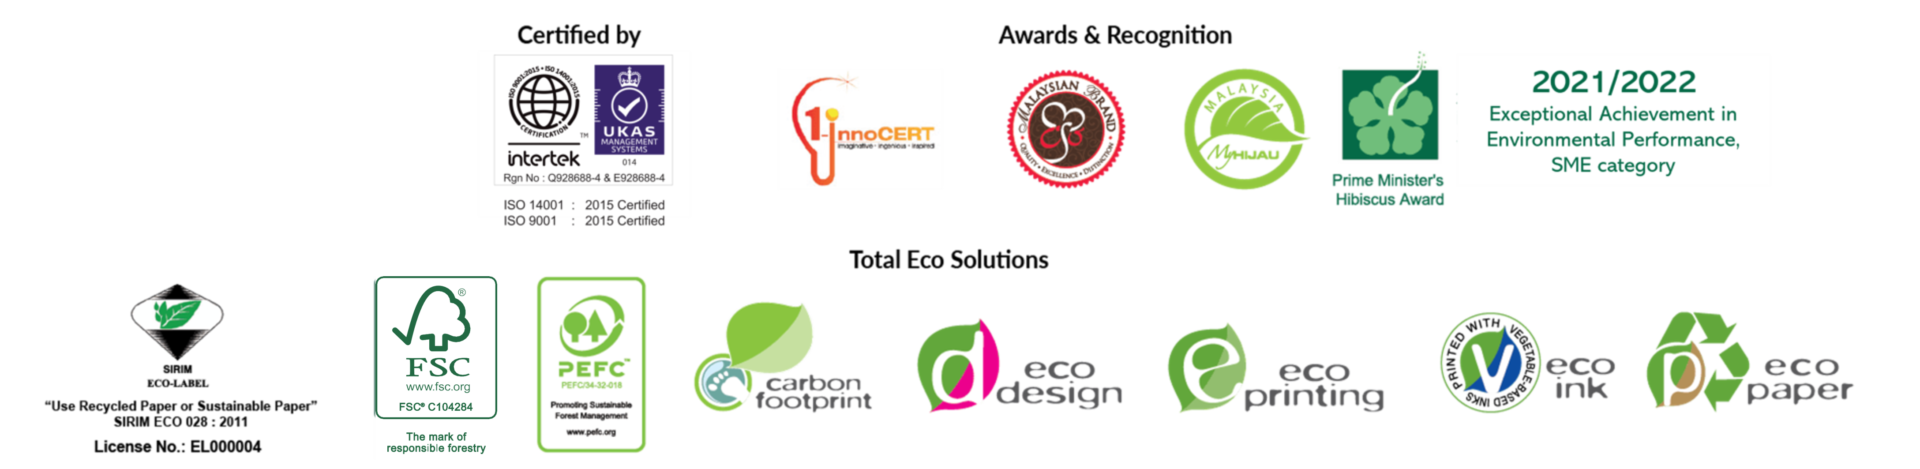 NETSECO award and solutions logos